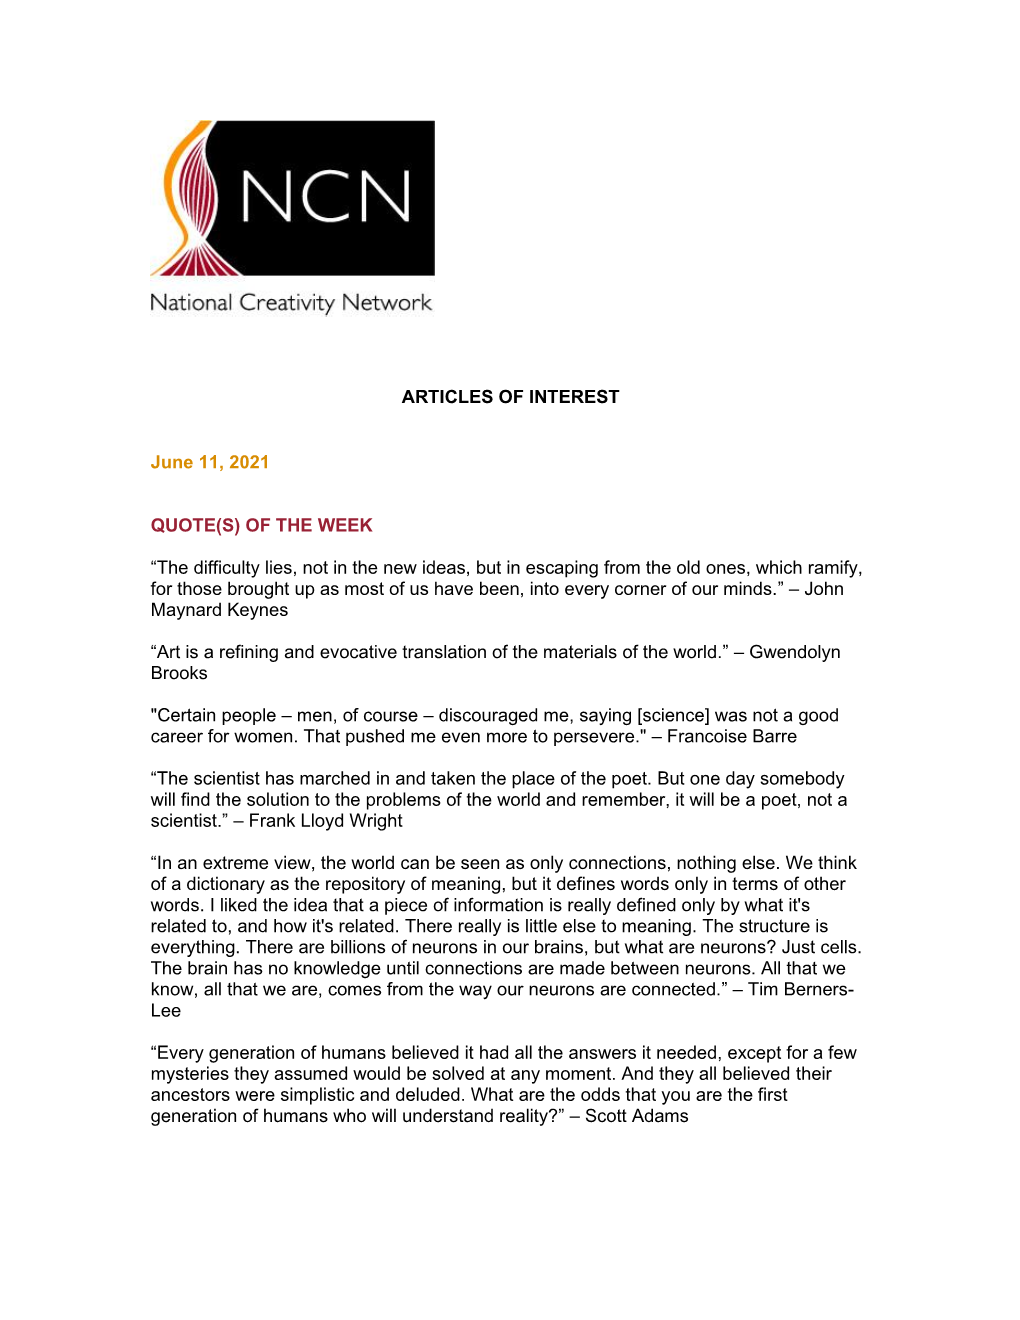 NCN Articles of Interest | June 11, 2021